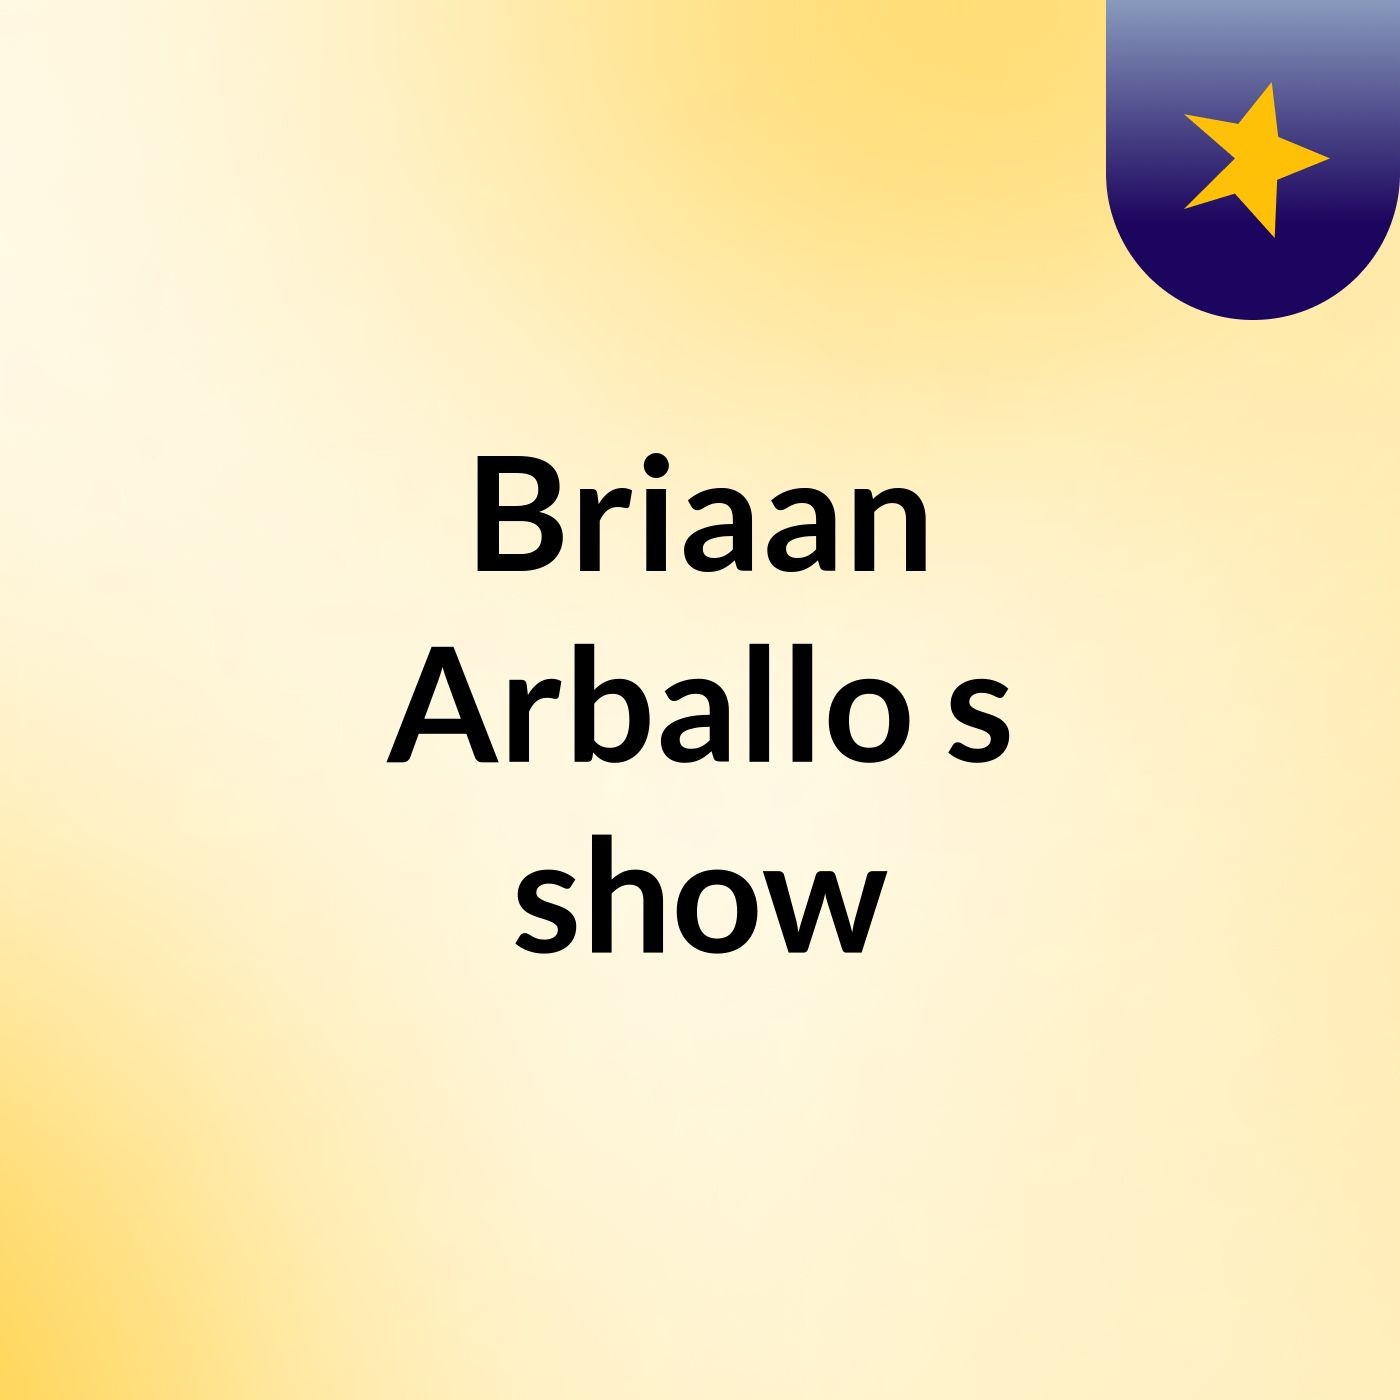 Briaan Arballo's show